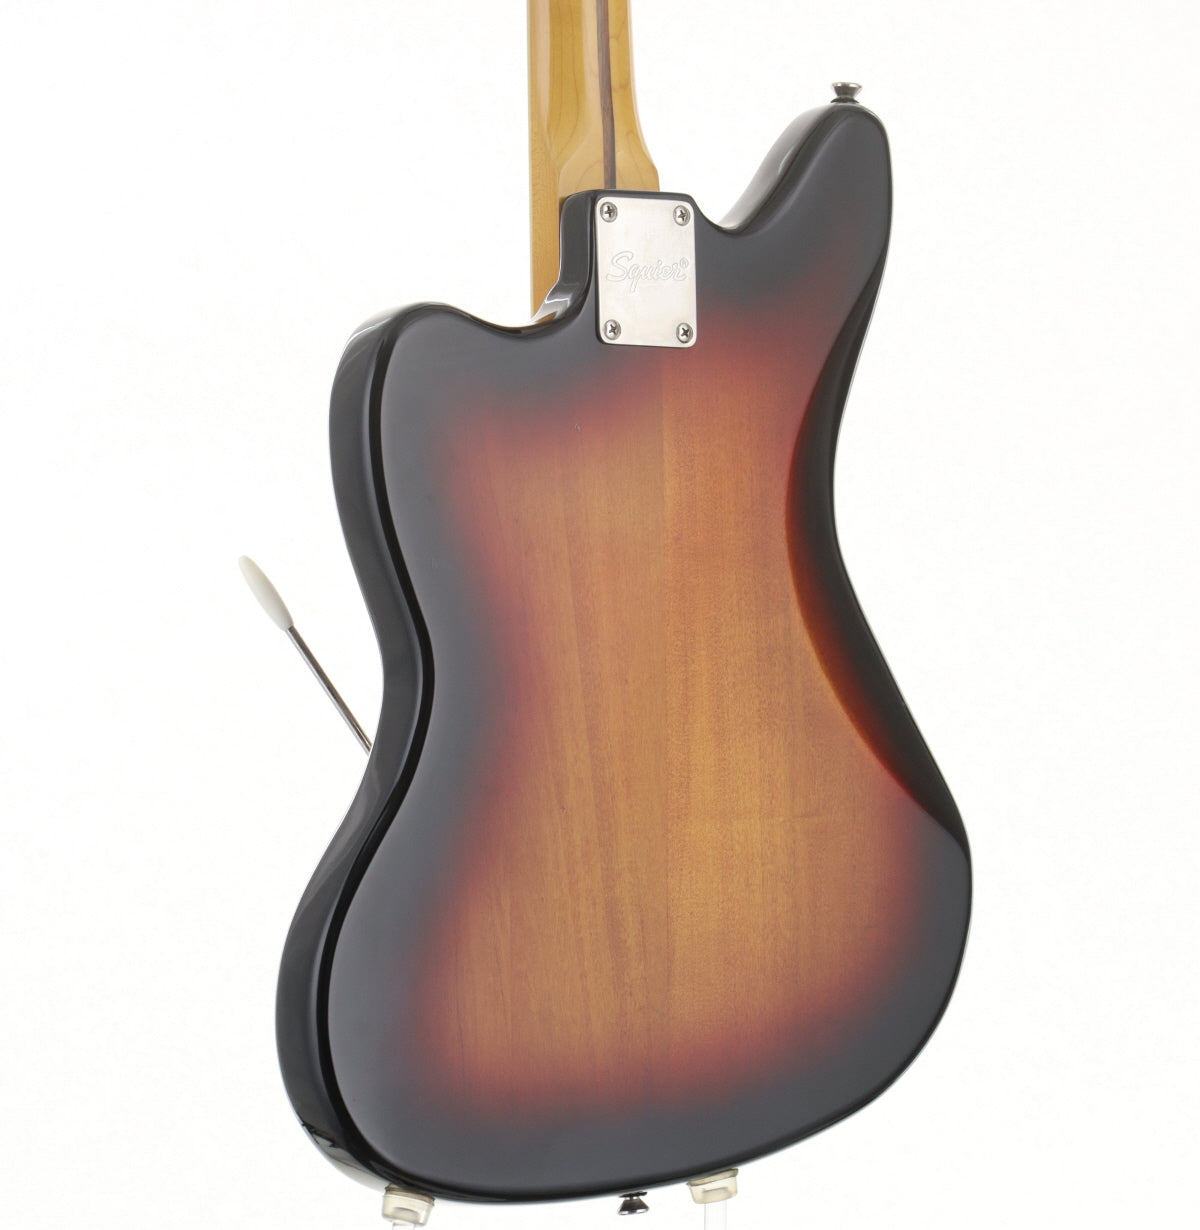 [SN ICSL20004367] USED Squier by Fender / Classic Vibe 70s Jaguar Laurel Fingerboard 3-Color Sunburst 2020 [08]